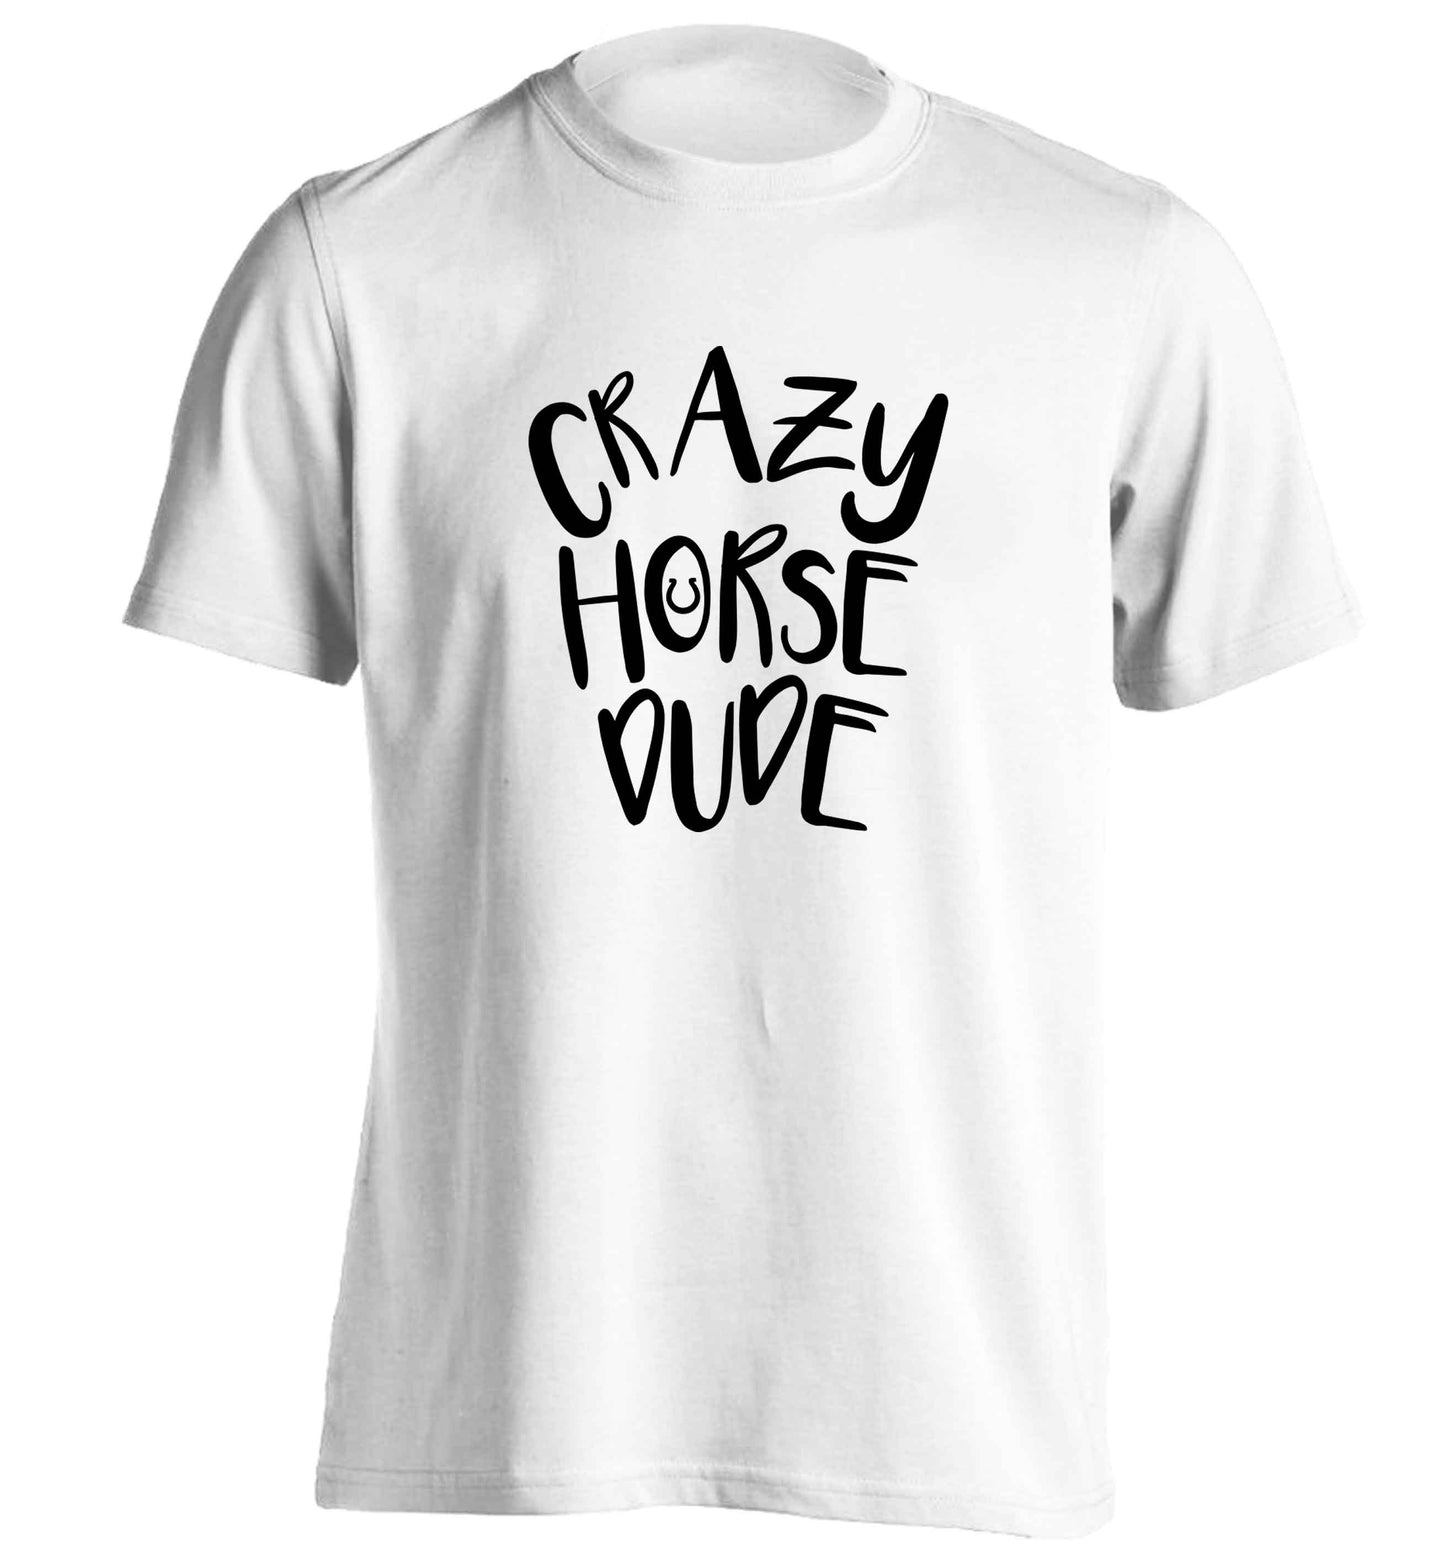 Crazy horse dude adults unisex white Tshirt 2XL